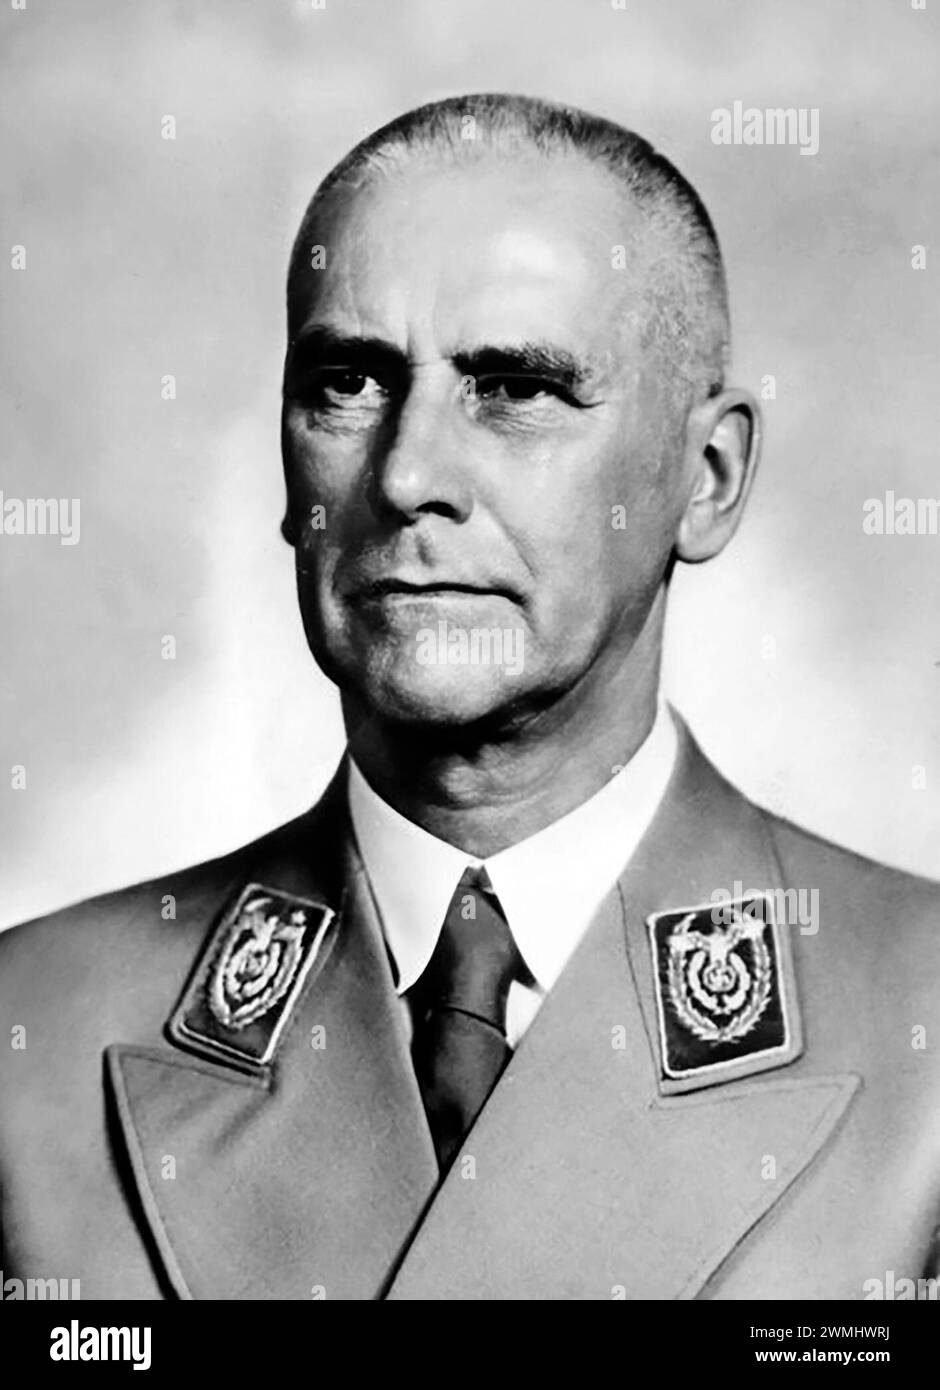 Wilhelm Frick. Portrait of the prominent German politician and nazi, Wilhelm Frick (1877-1946), c. 1940-45 Stock Photo